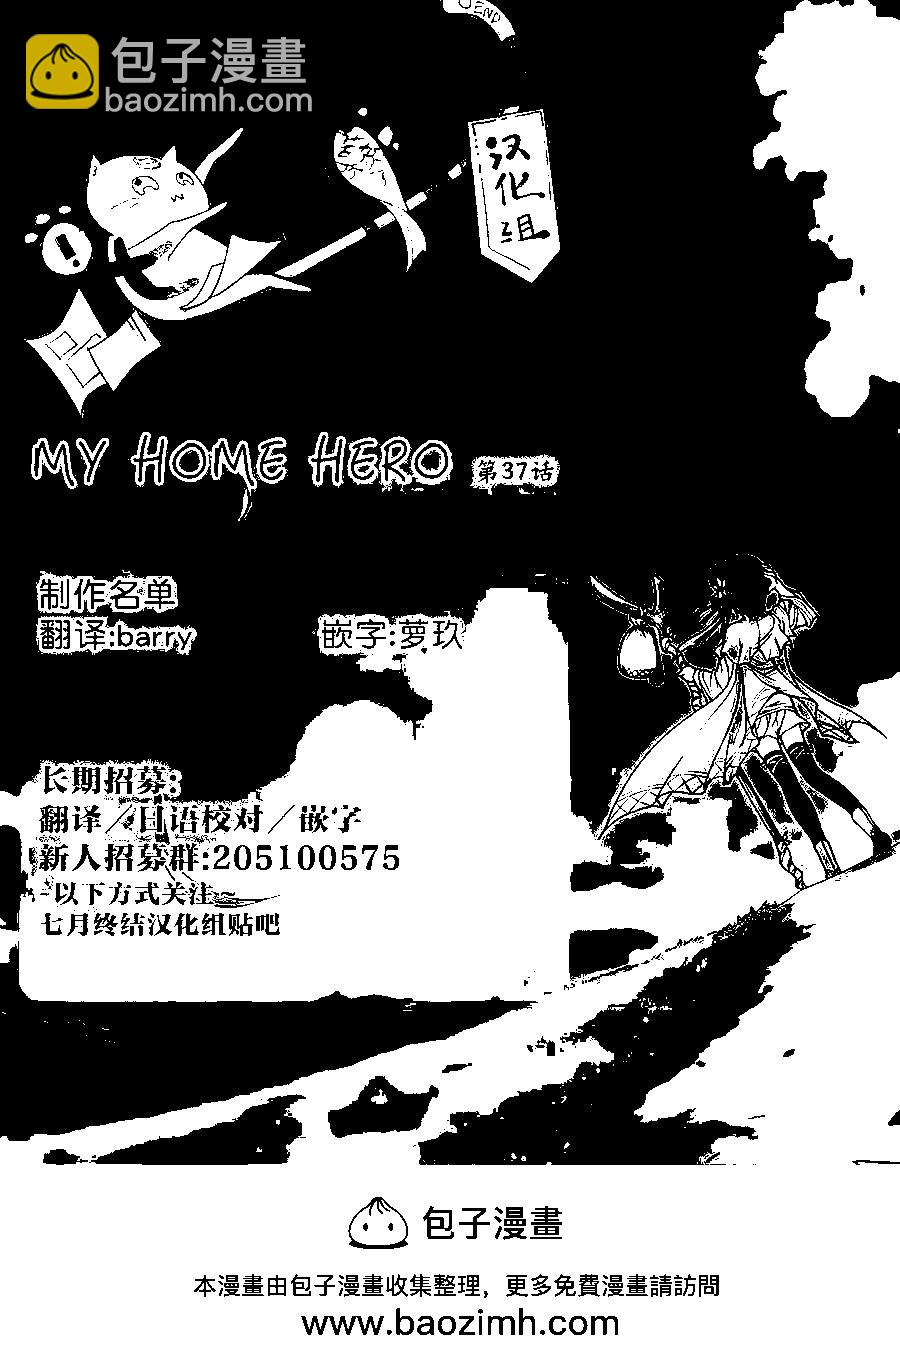 MY HOME HERO - 第37回 - 2